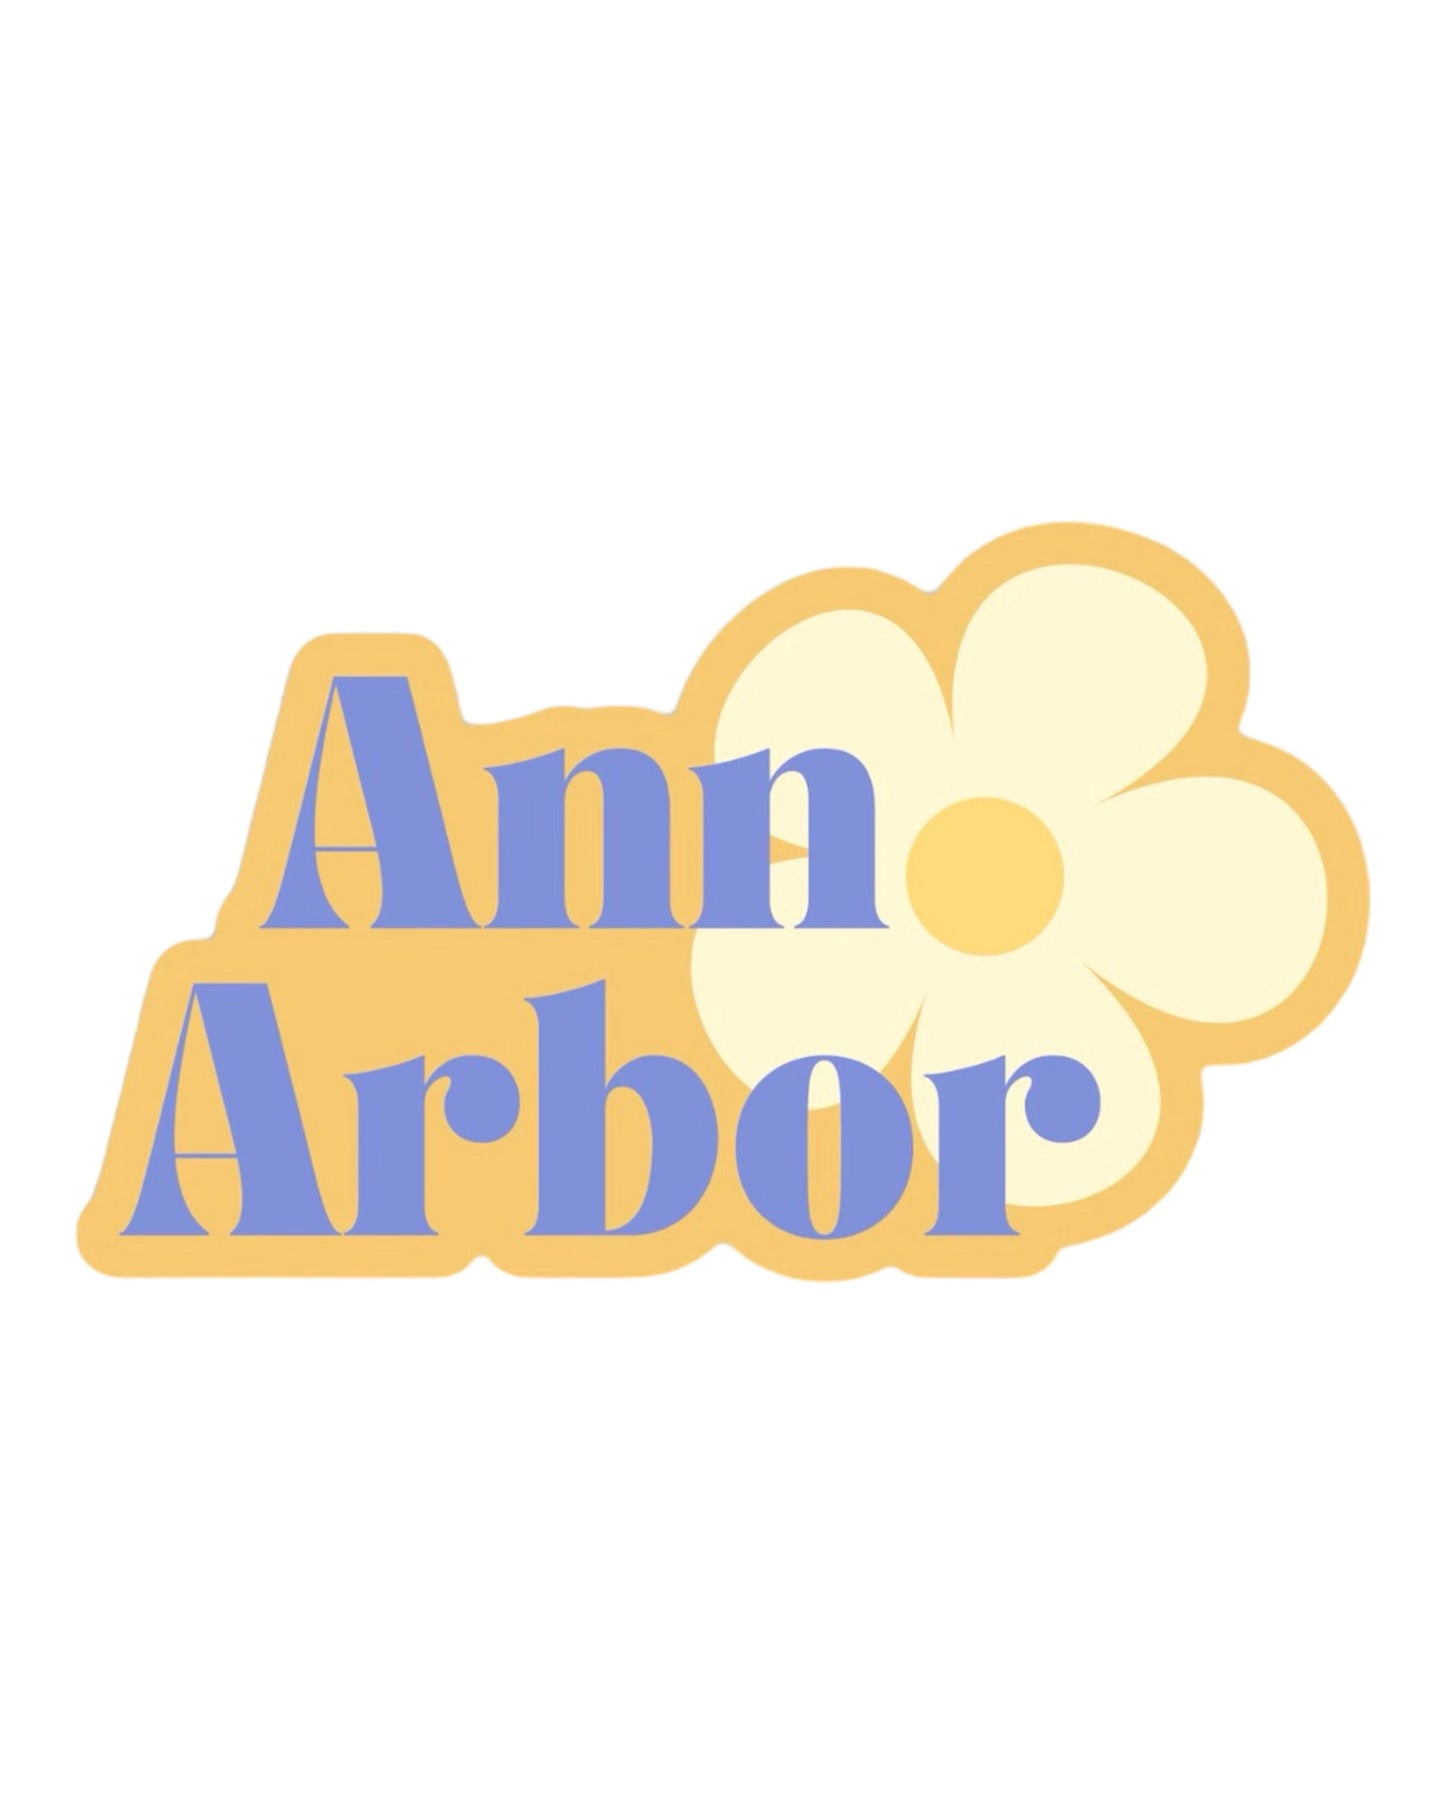 Load image into Gallery viewer, Ann Arbor Flower Sticker
